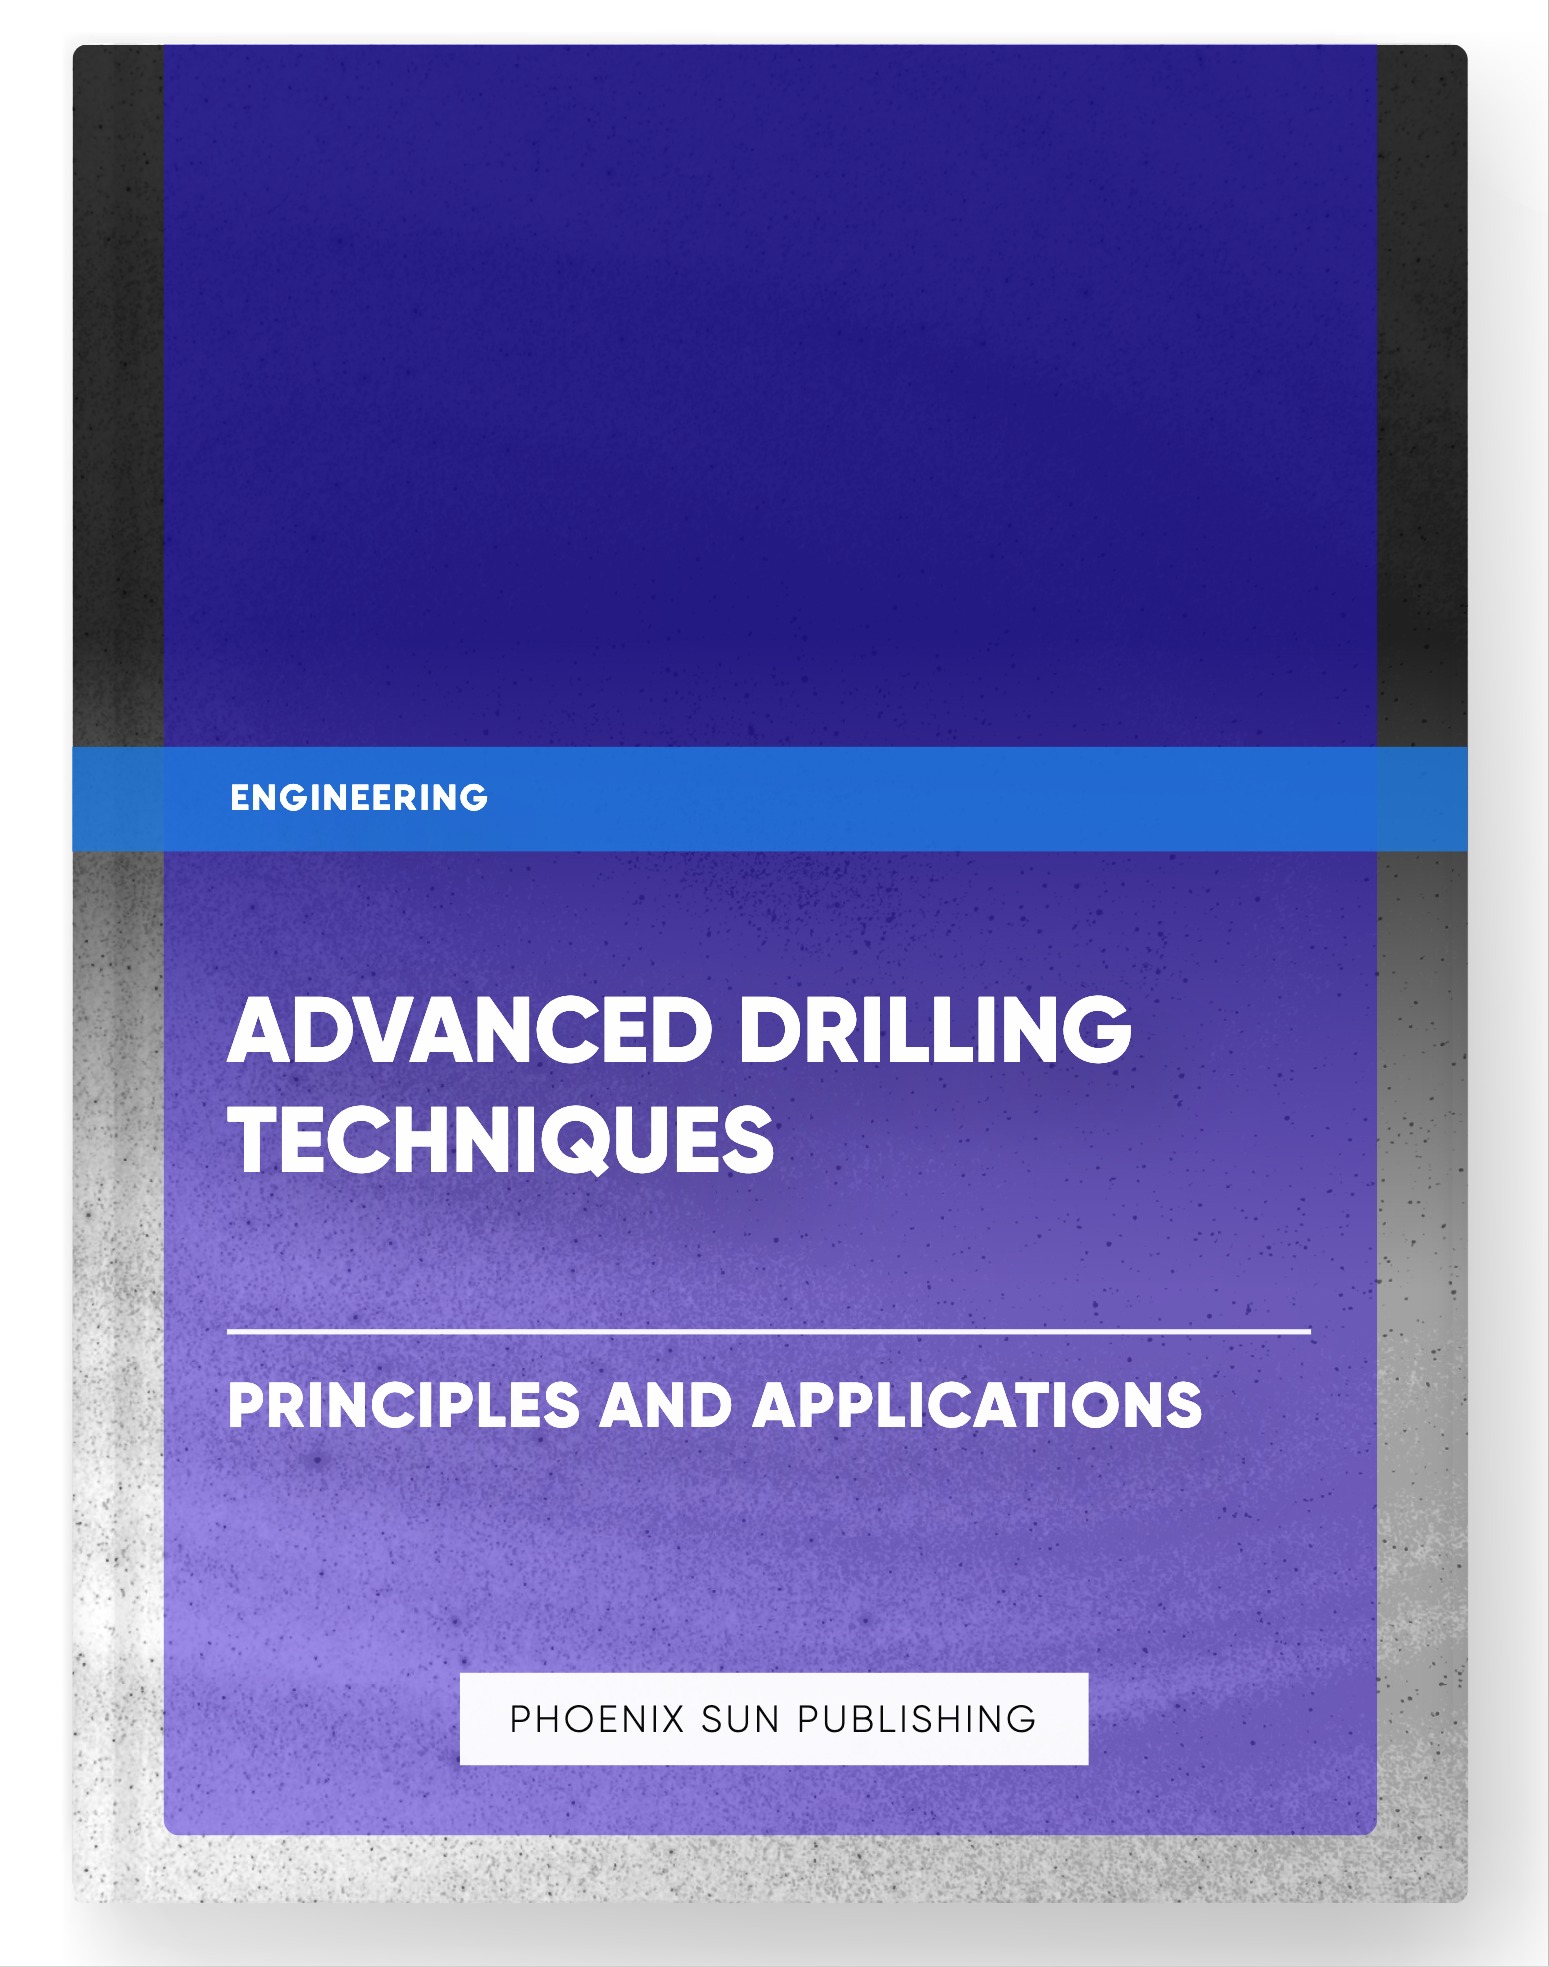 Advanced Drilling Techniques – Principles and Applications